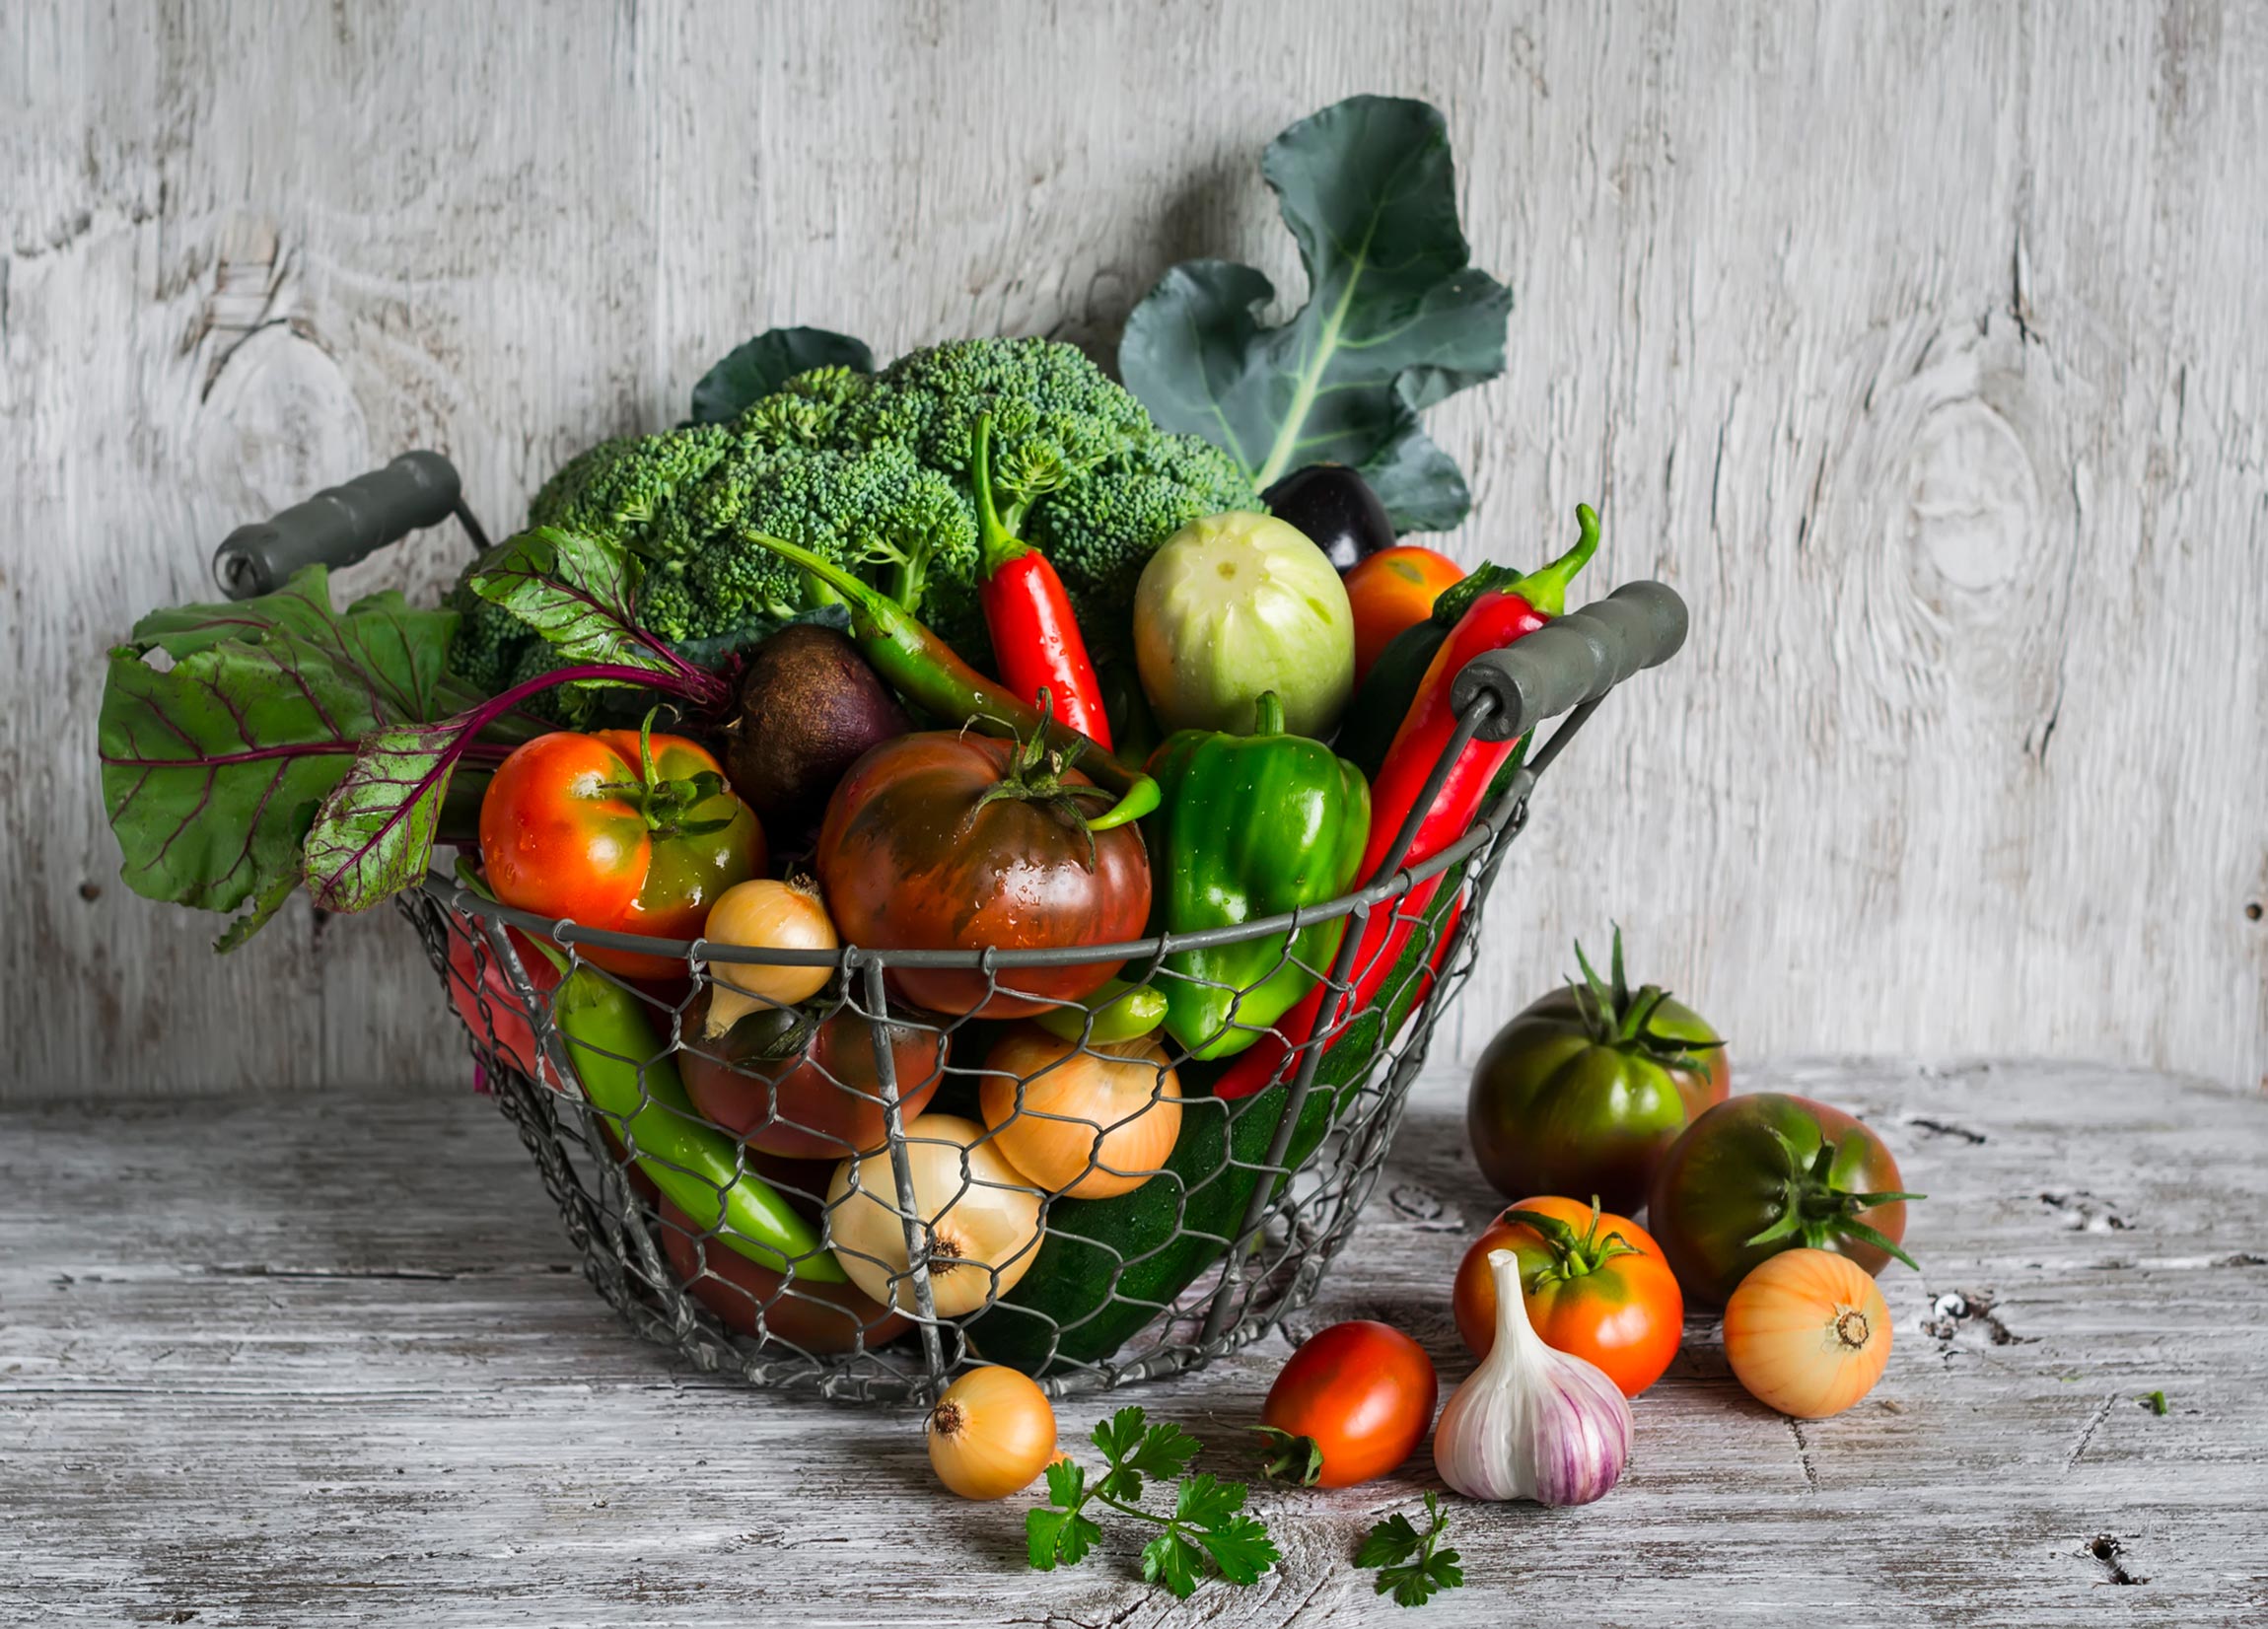 Colorful vegetables for autoimmune disease diet